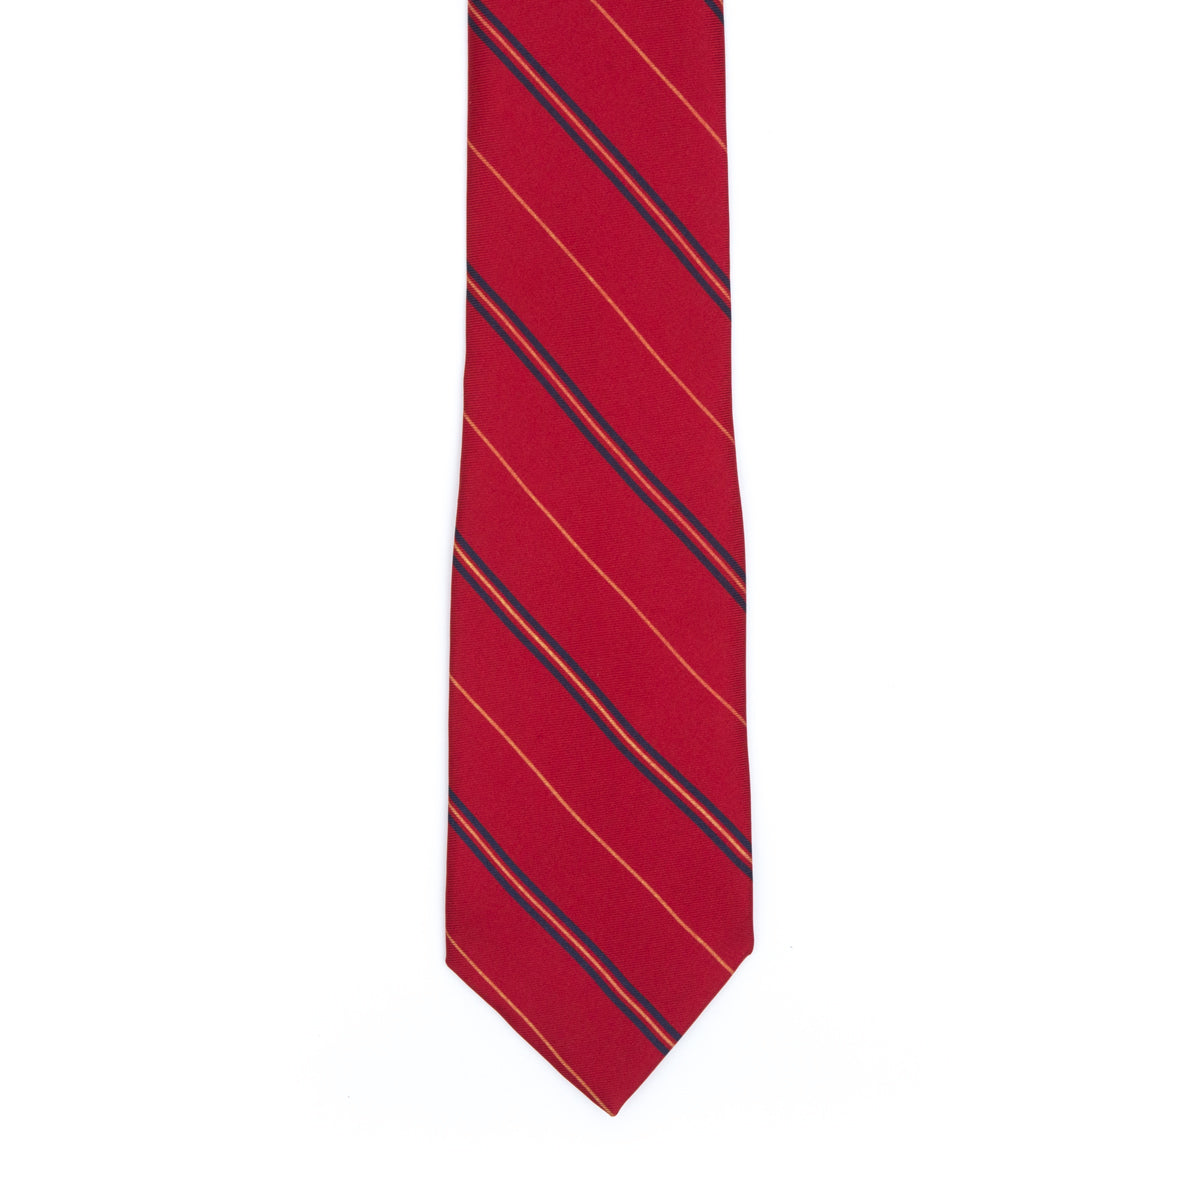 Red striped tie